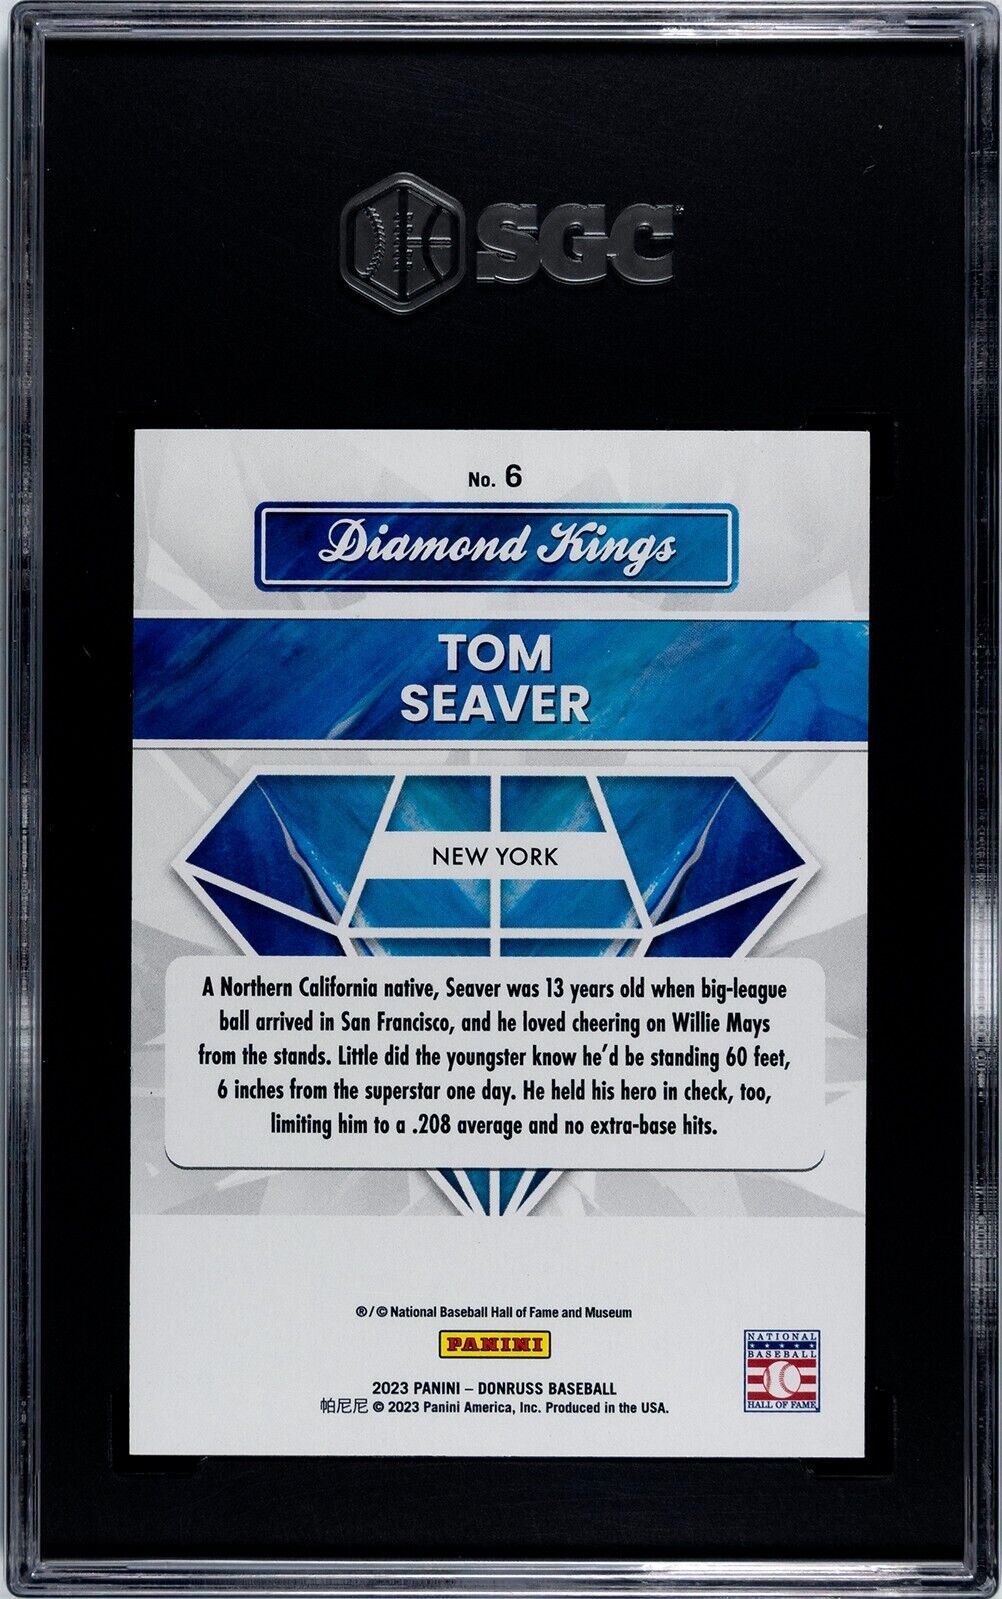 2023 Donruss Diamond Kings Press Proof #6 Tom Seaver New York 3/5 SGC 9.5